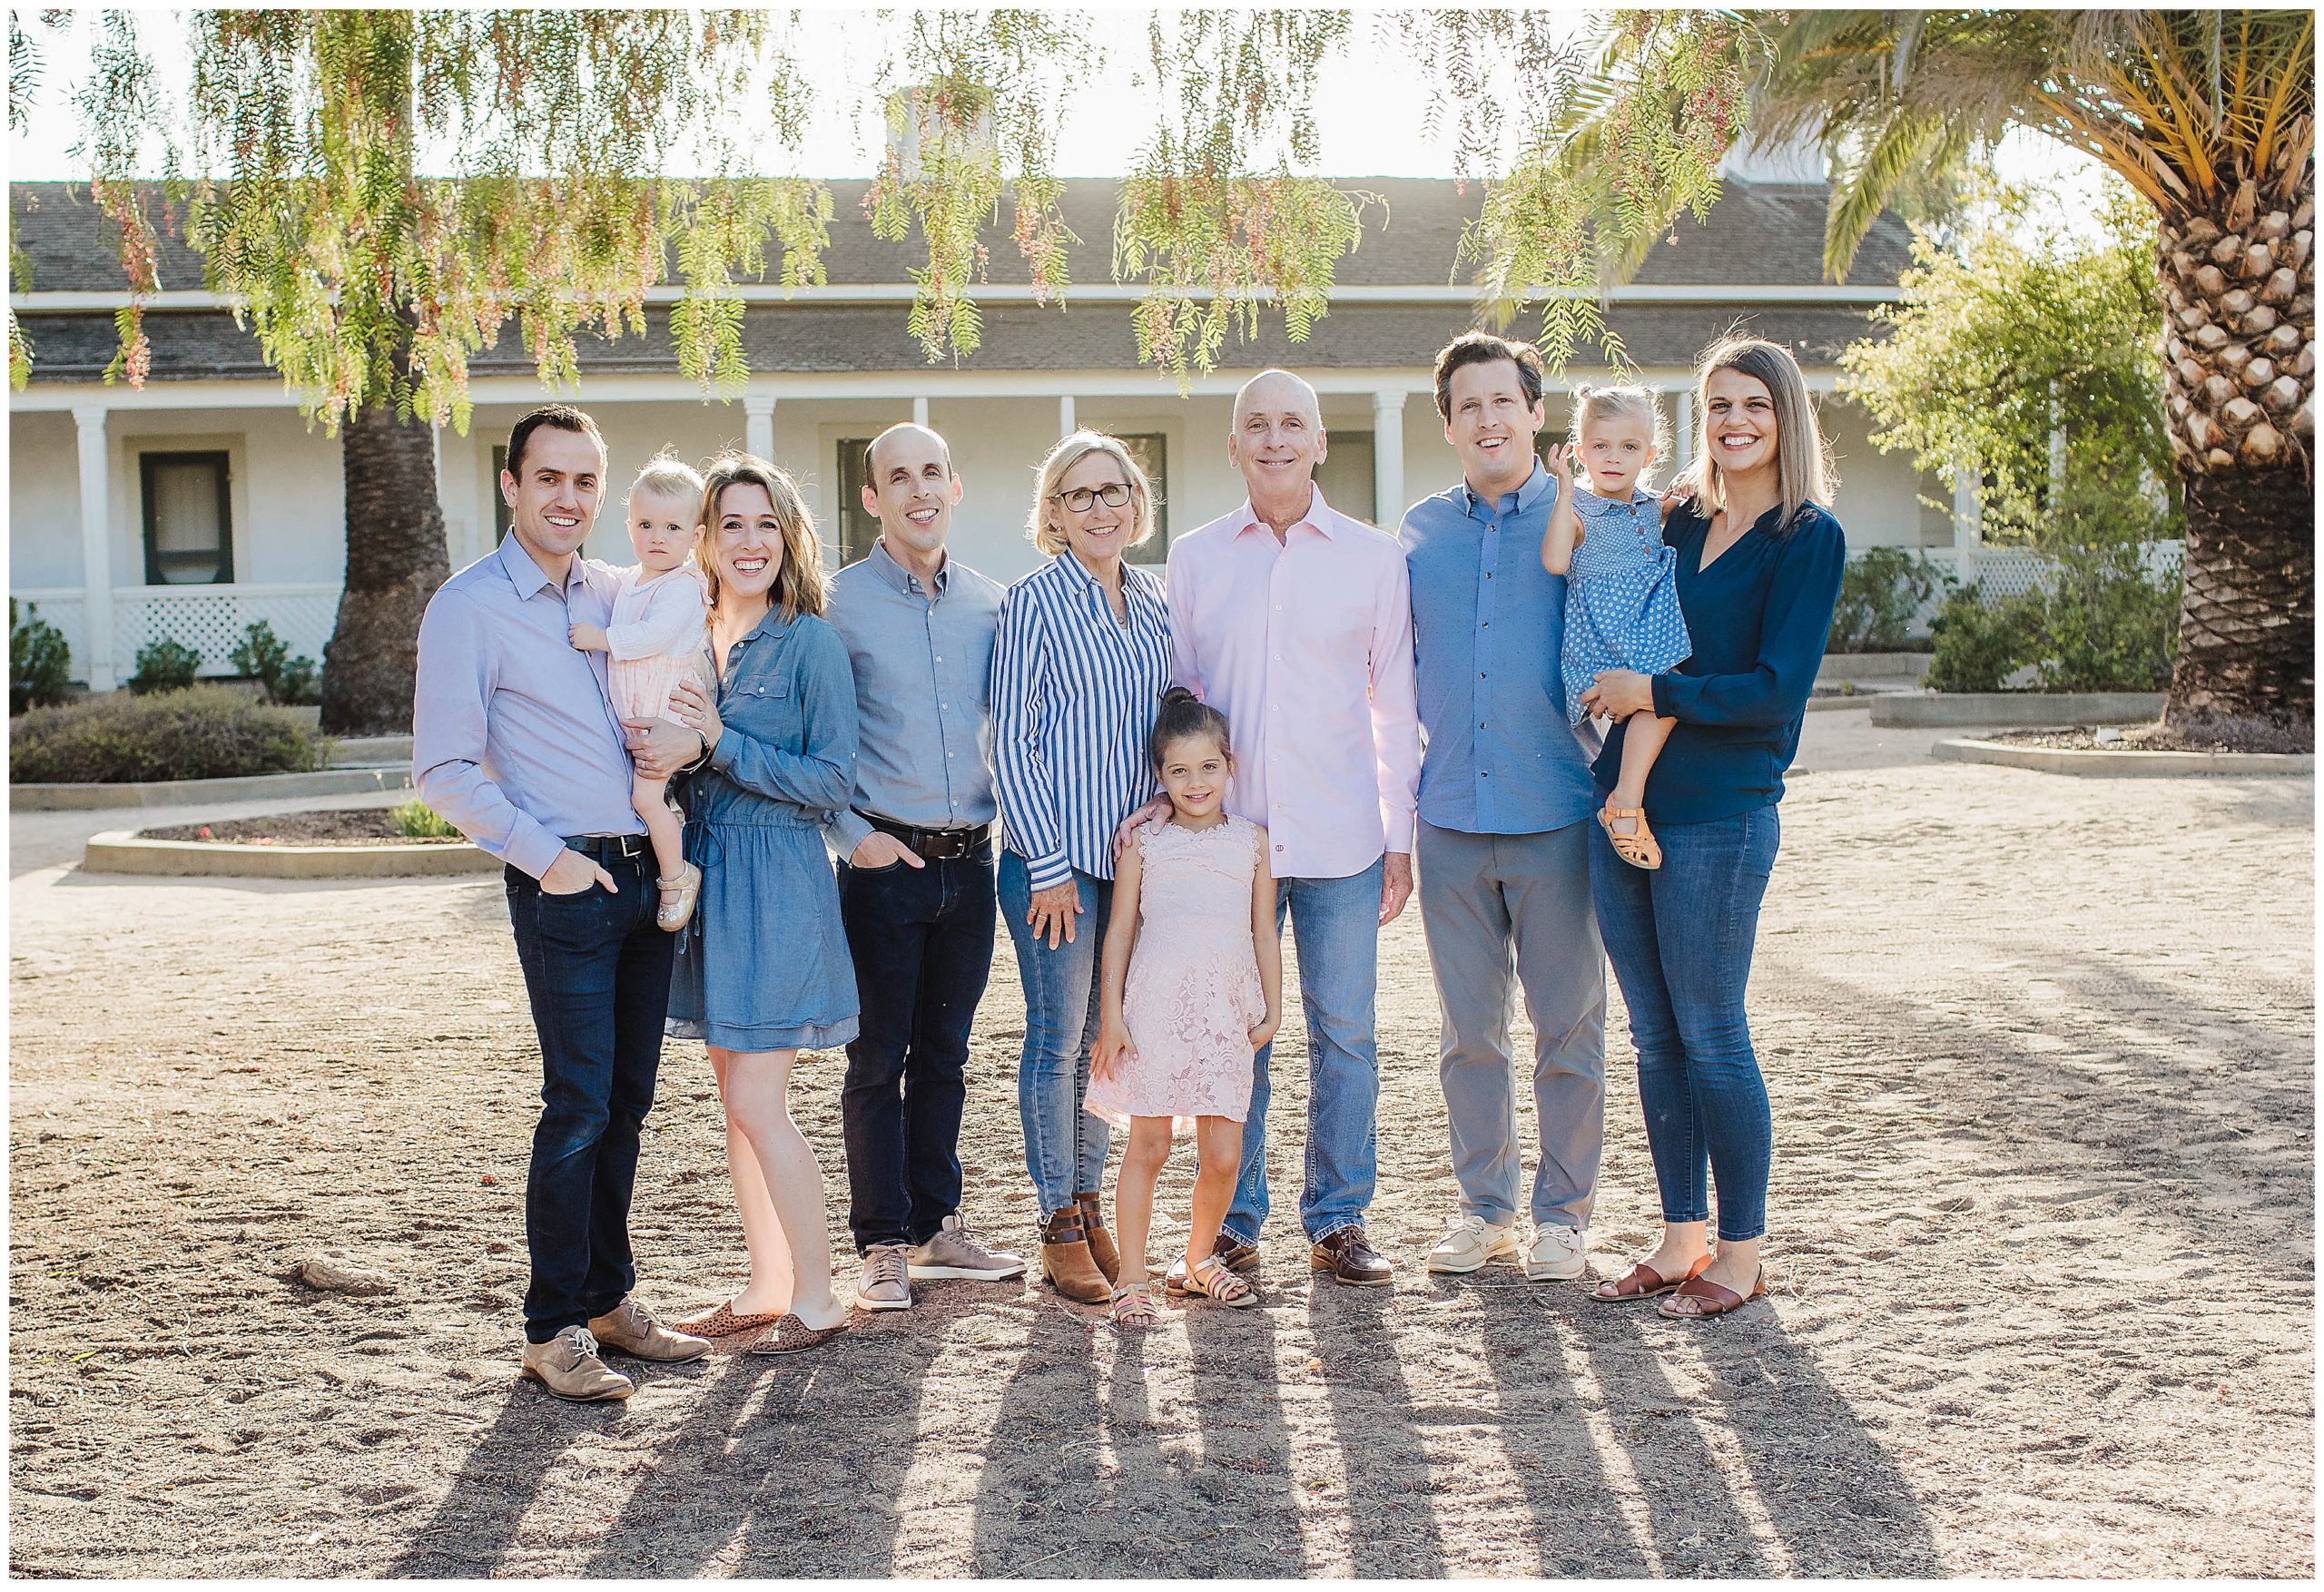 Family photos at Rancho Penasquitos Ranch House